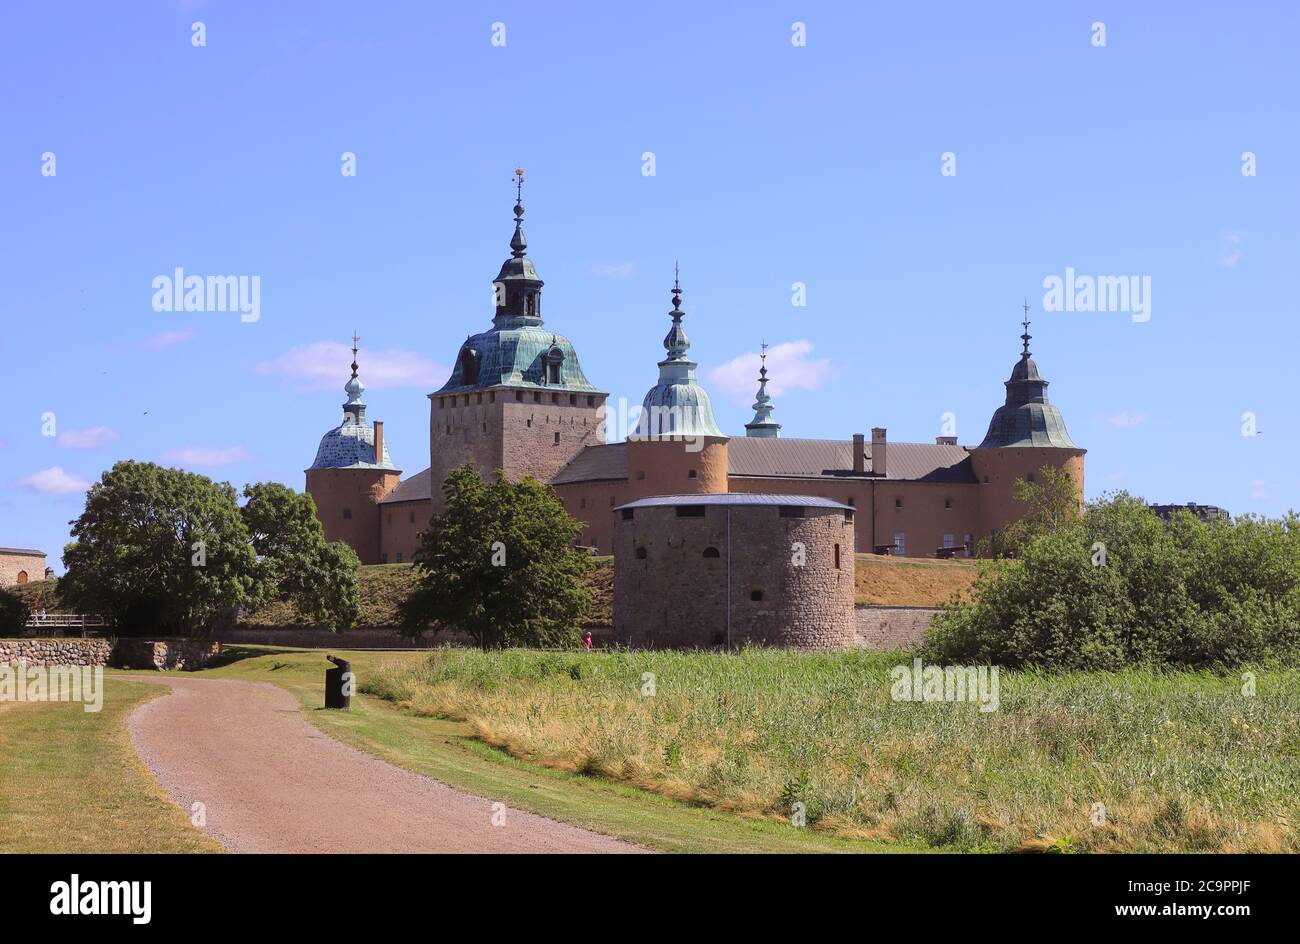 The Kalmar castle located in Swedish province of Smaland. Stock Photo